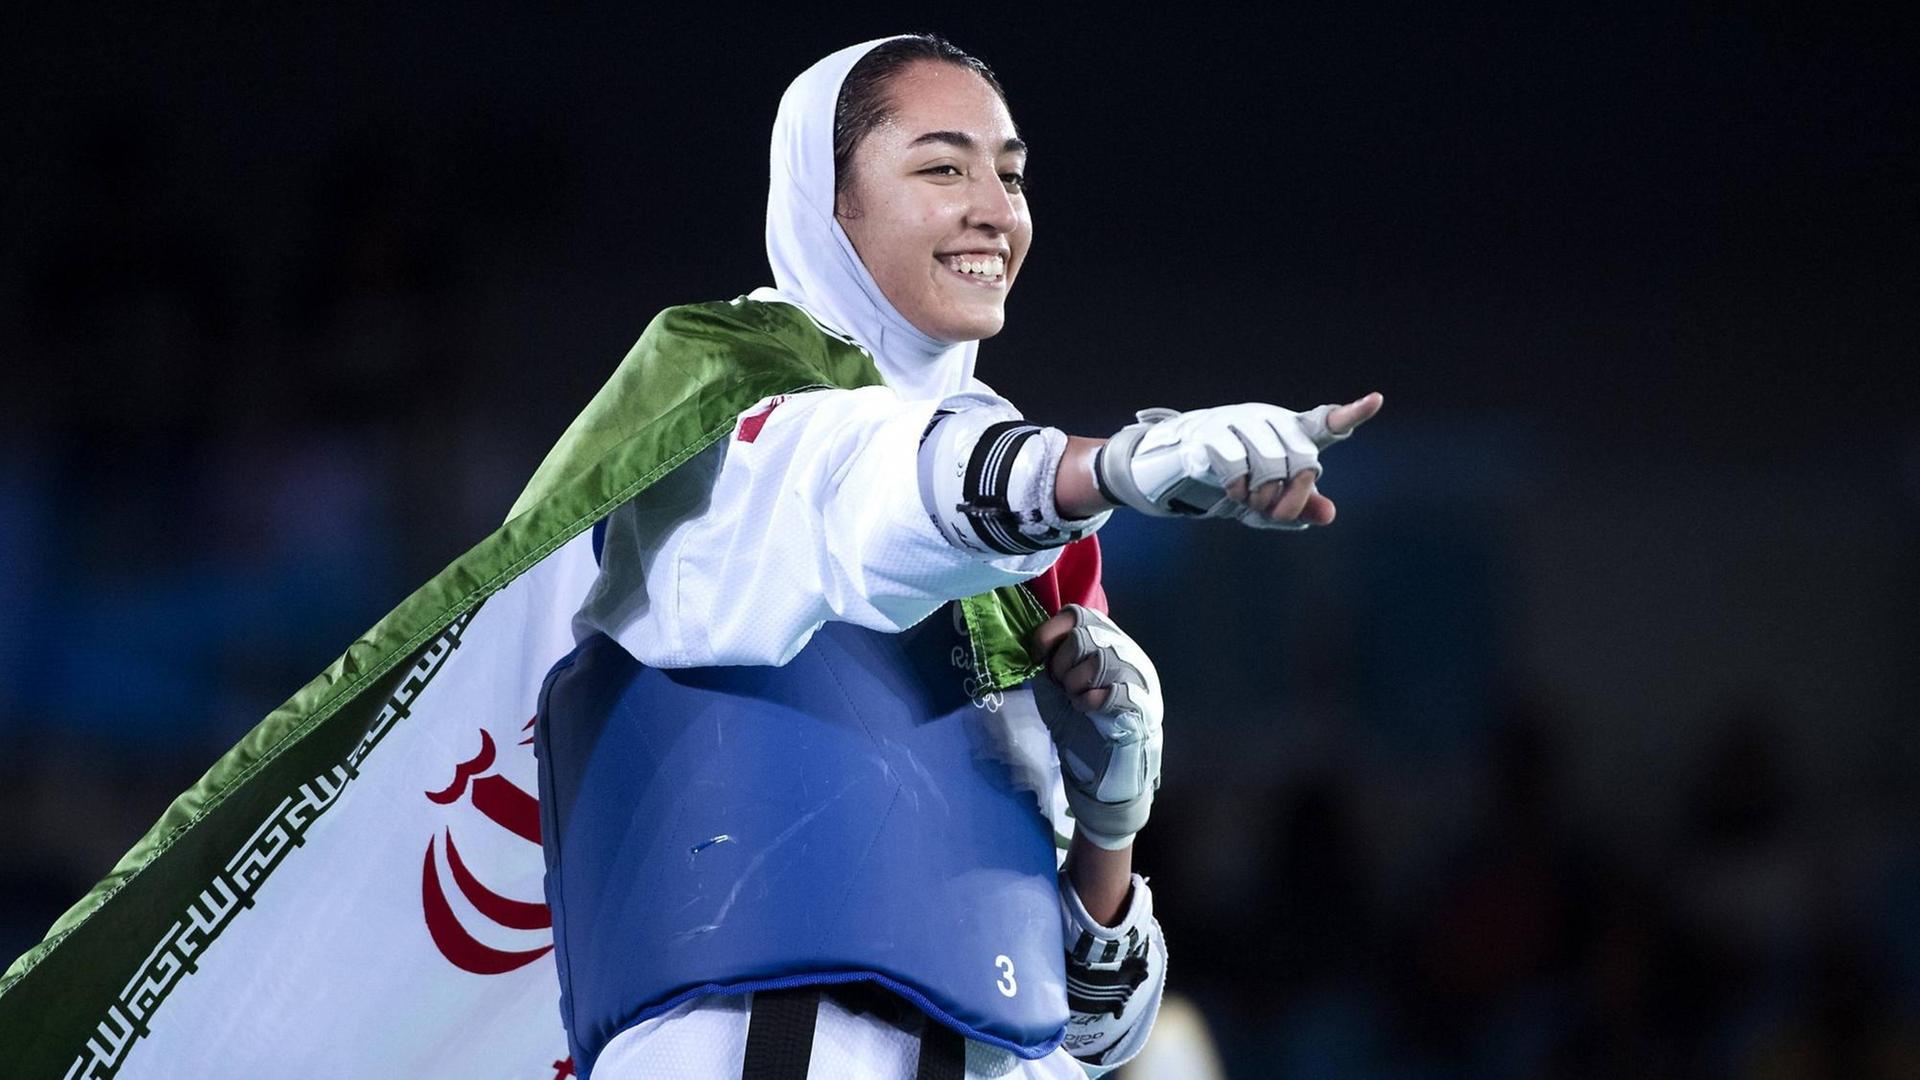 160818 Irans Kimia Alizadeh Zenoorin 57-kilos taekwondo 18 august 2016 Rio de Janeiro. PUBLICATIONxINxGERxSUIxONLY Copyright: CARLxSANDIN BB160818CS079